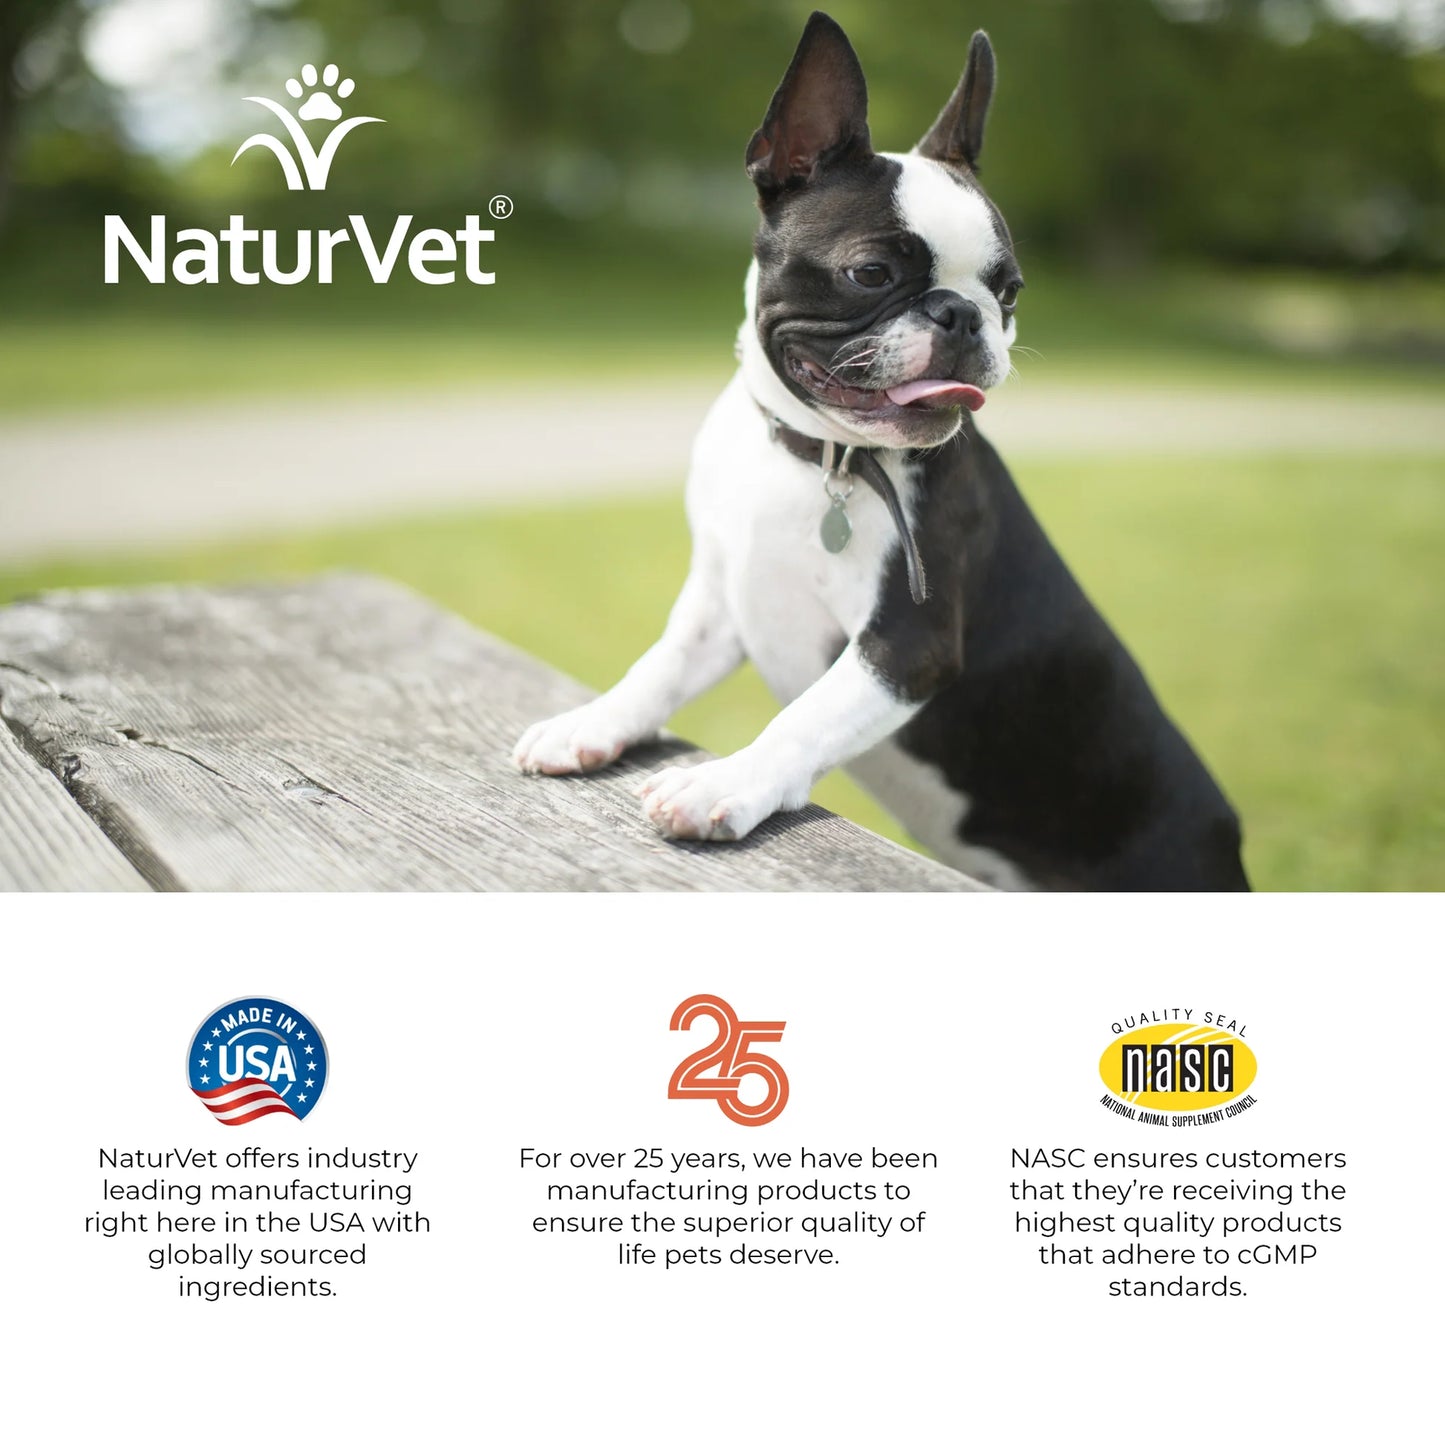 NaturVet Advanced Probiotics & Enzymes Plus Vet Strength PB6 Probiotic Cat & Dog Powder